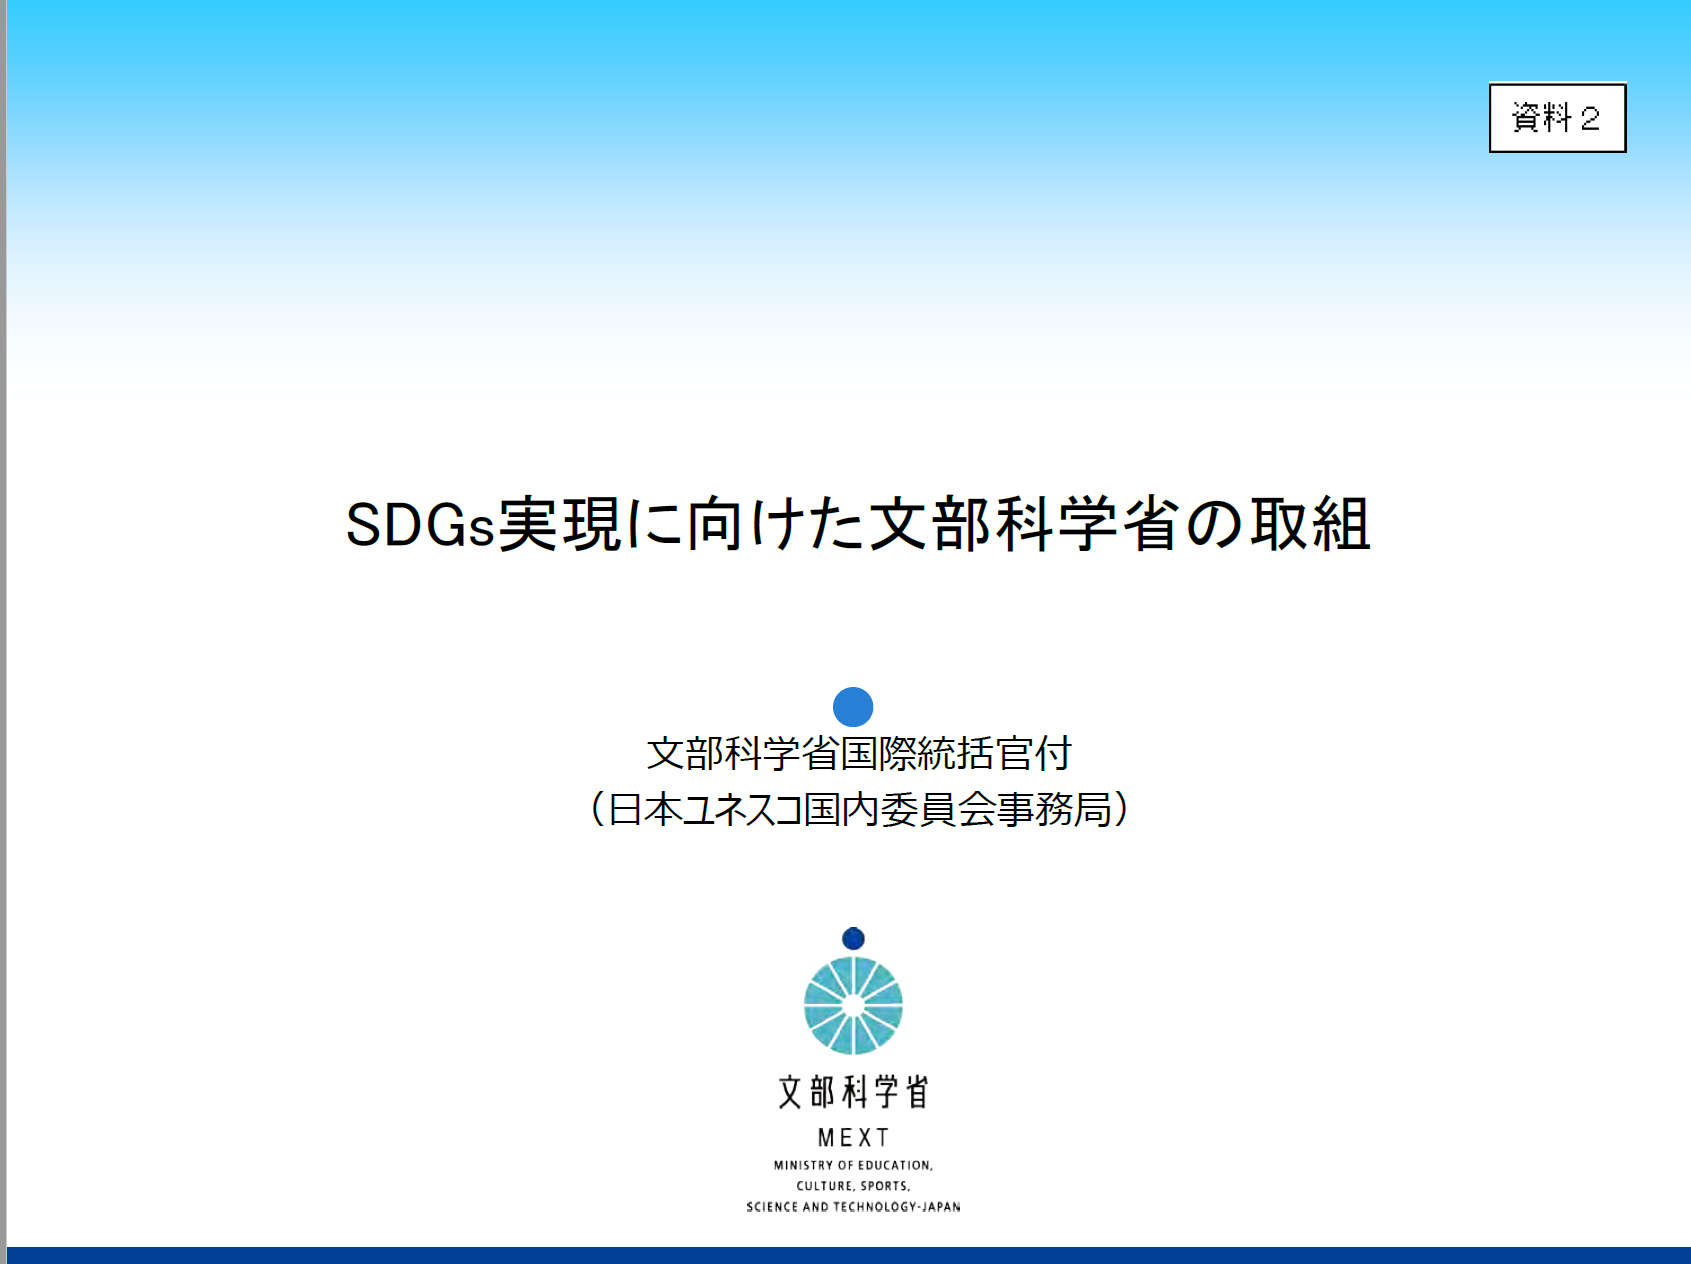 朝活100本ノック / SDGs・ESG投資 授業54日目【教育業界も変化】